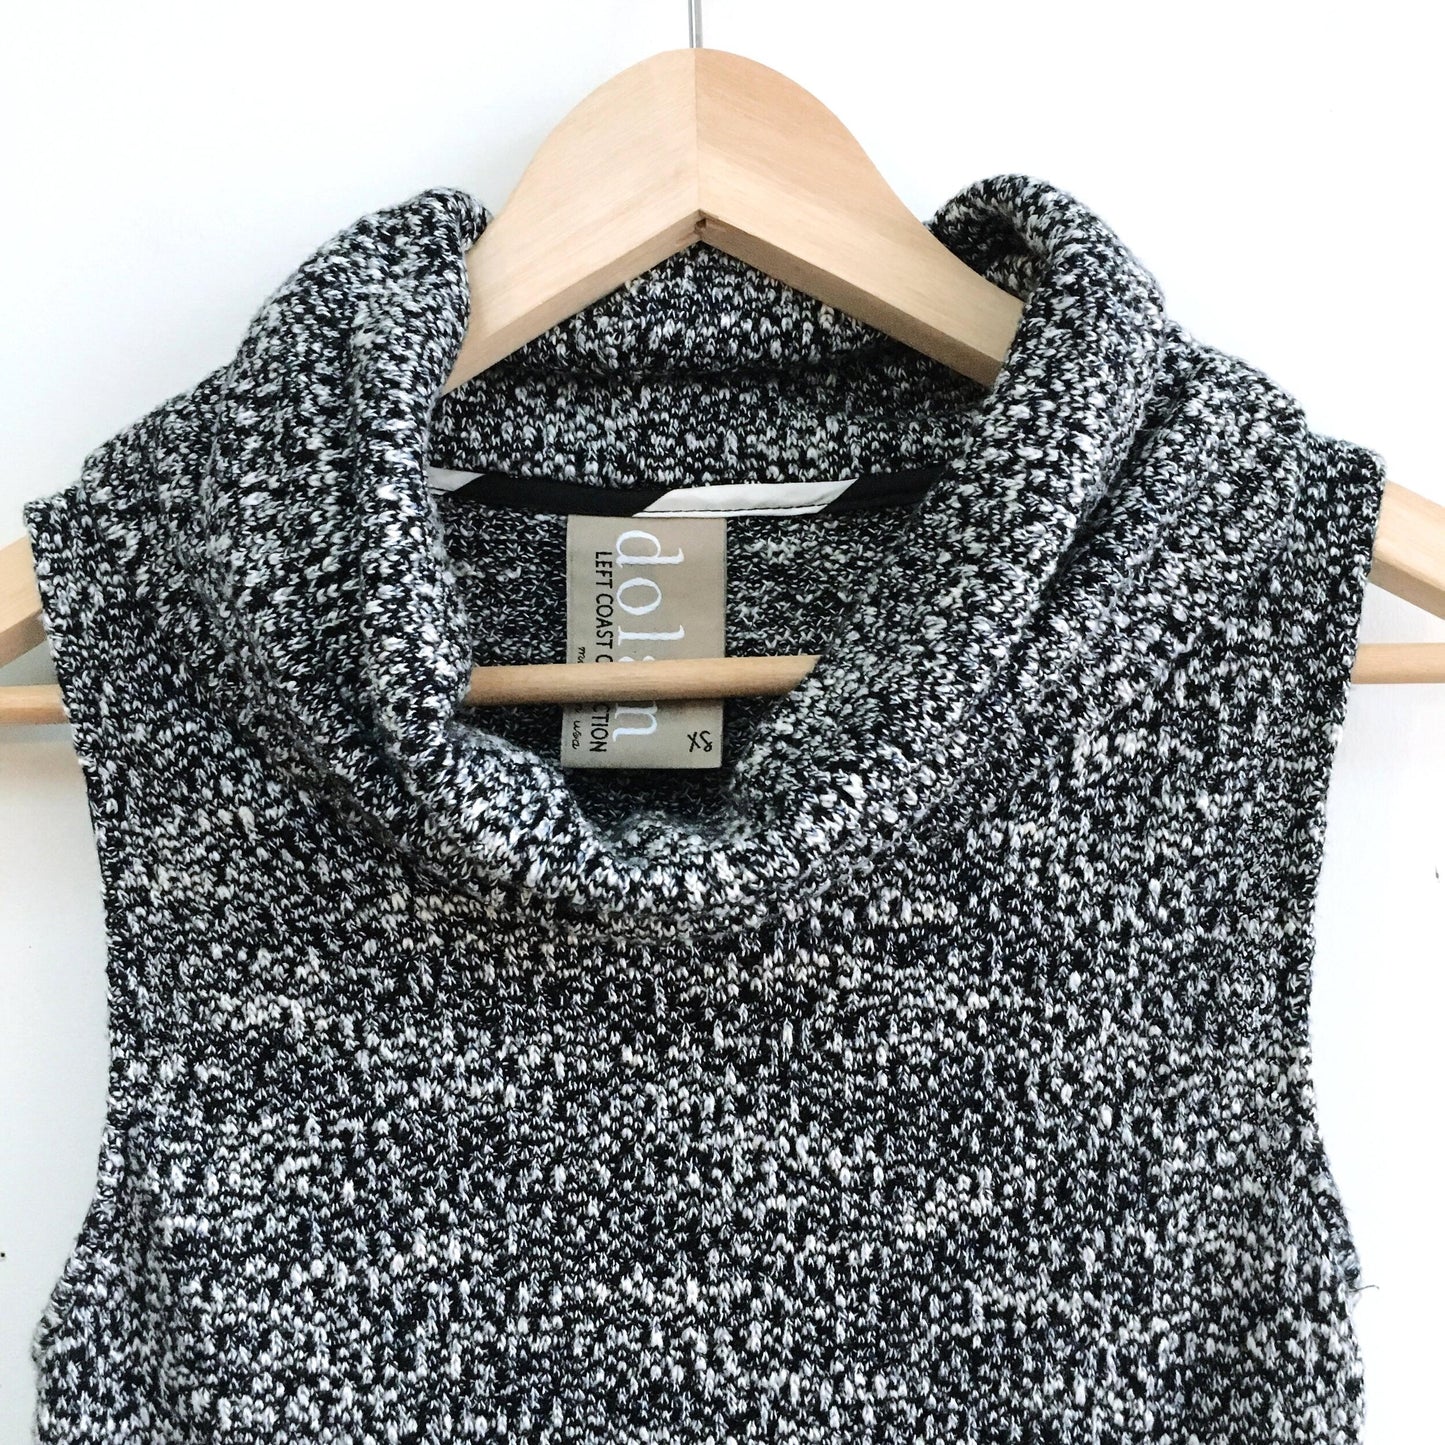 Dolan Left Coat Charente cowl neck sweater - size xs